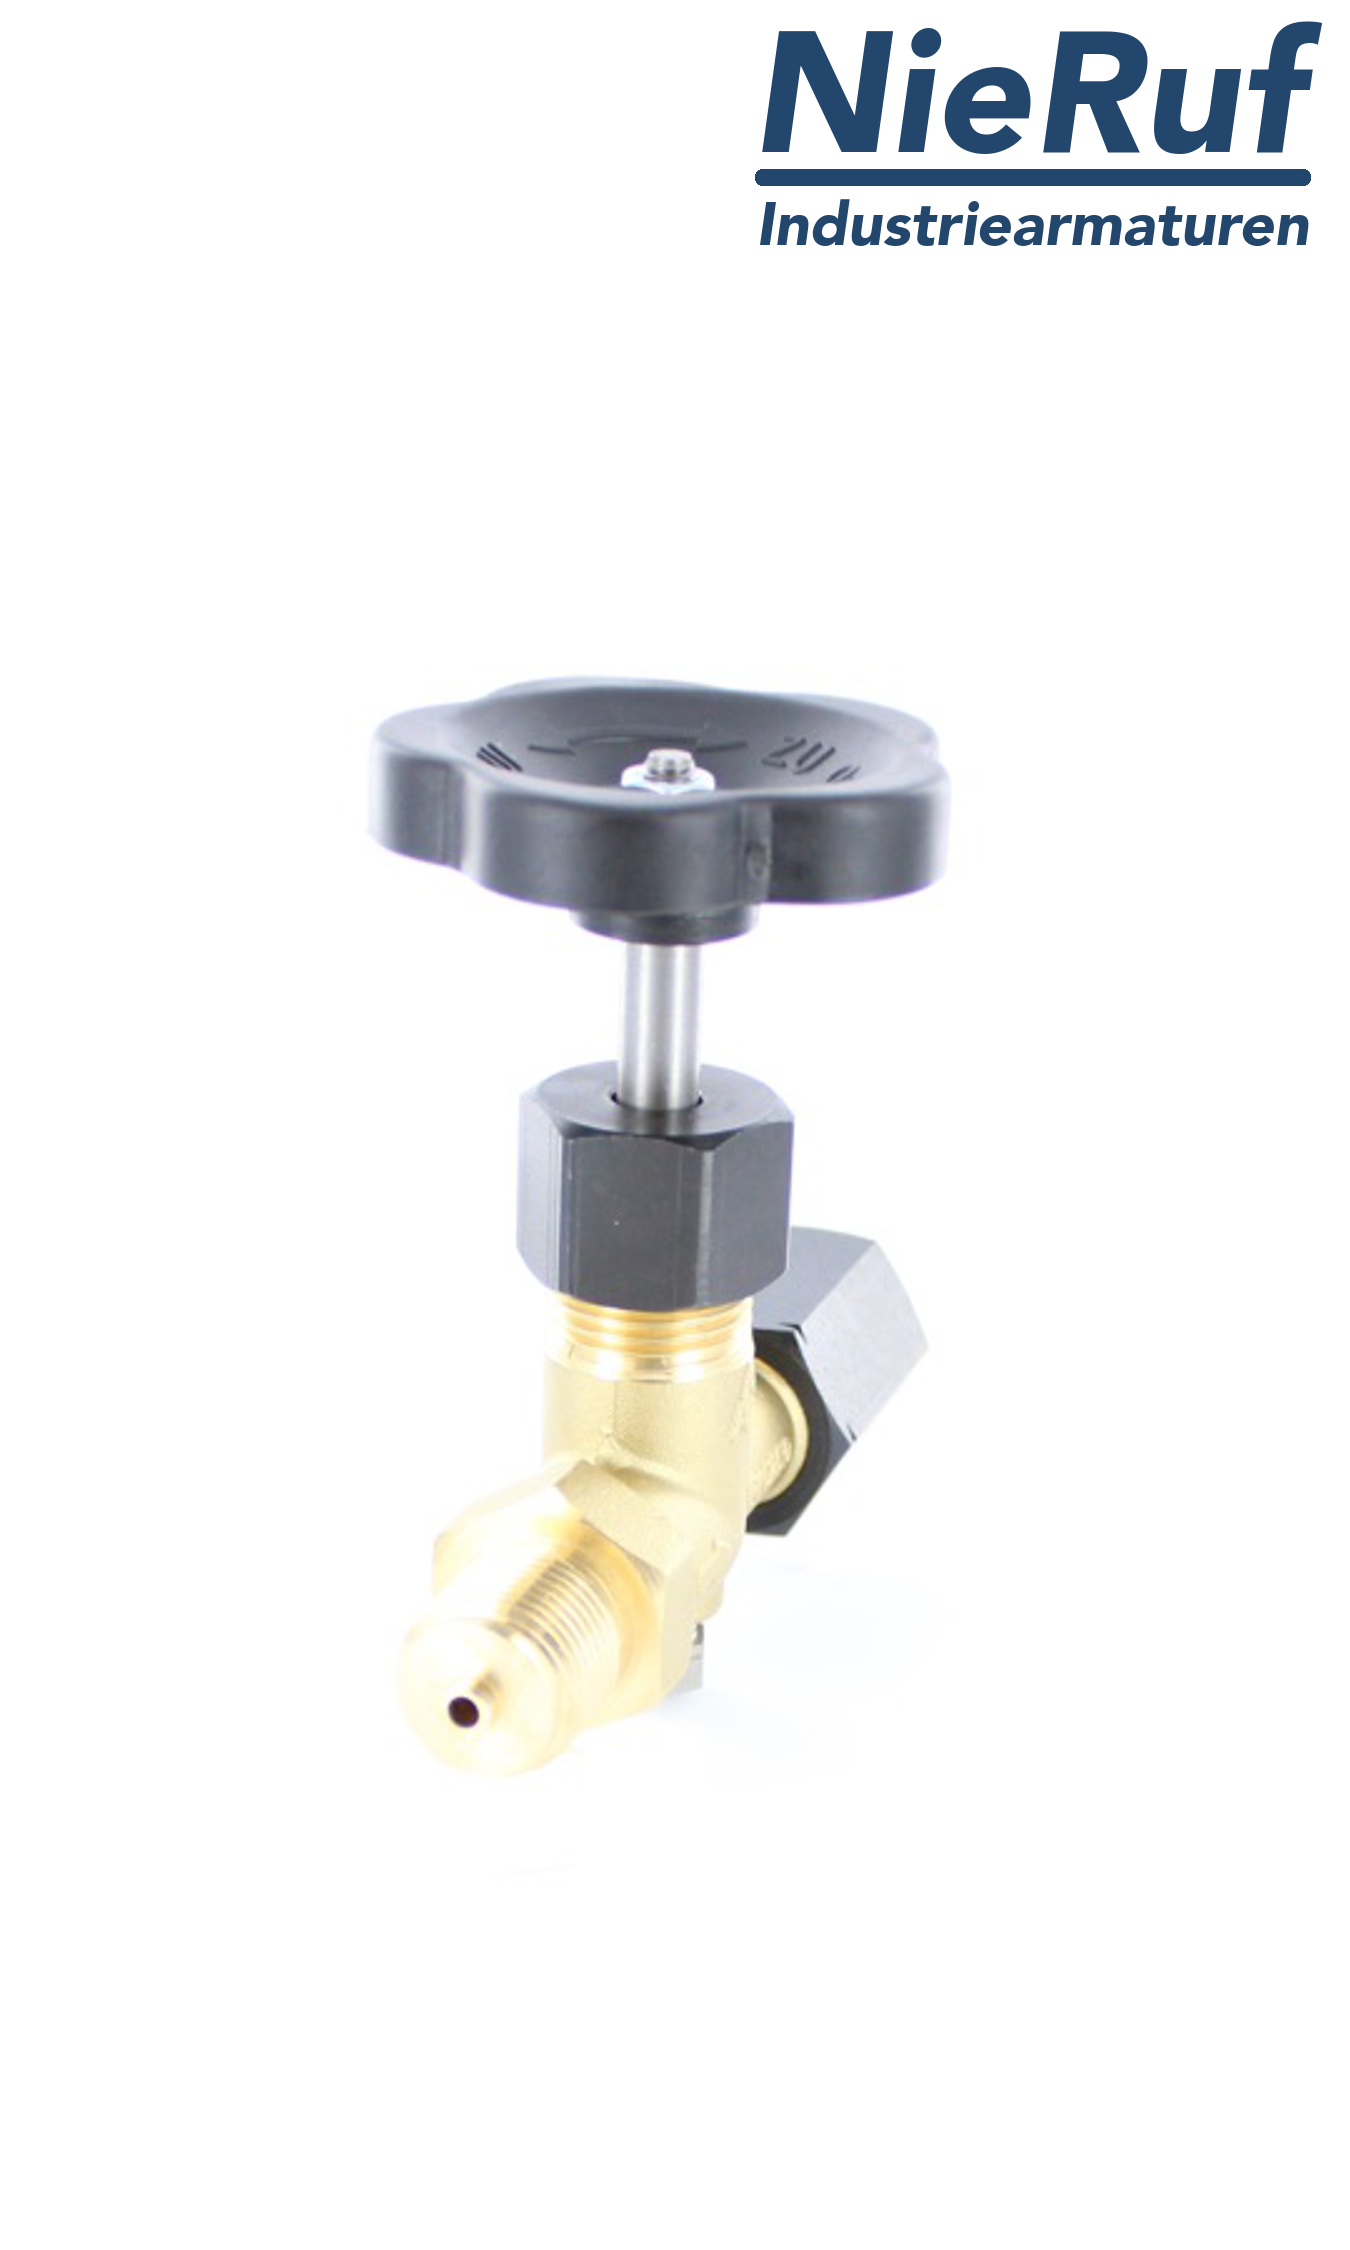 manometer gauge valves sleeve x sleeve DIN 16270 brass 250 bar